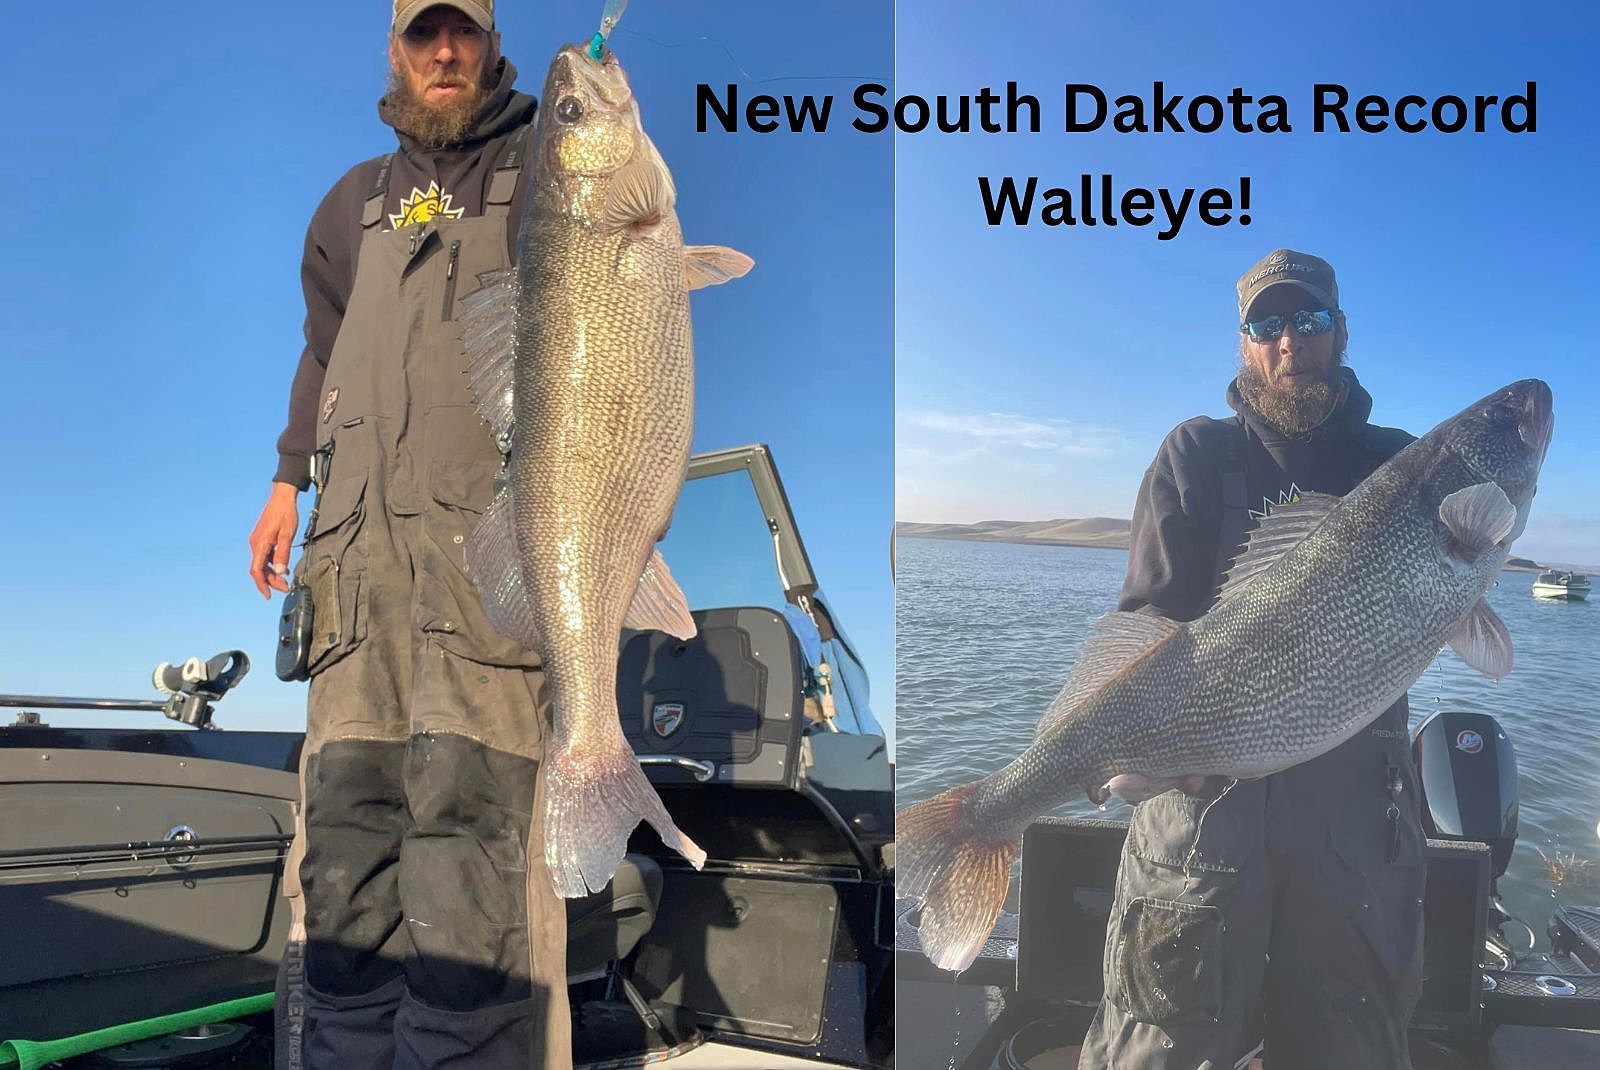 walleye record south dakota, what is the record walleye in south dakota? new record for South Dakota walleye, 